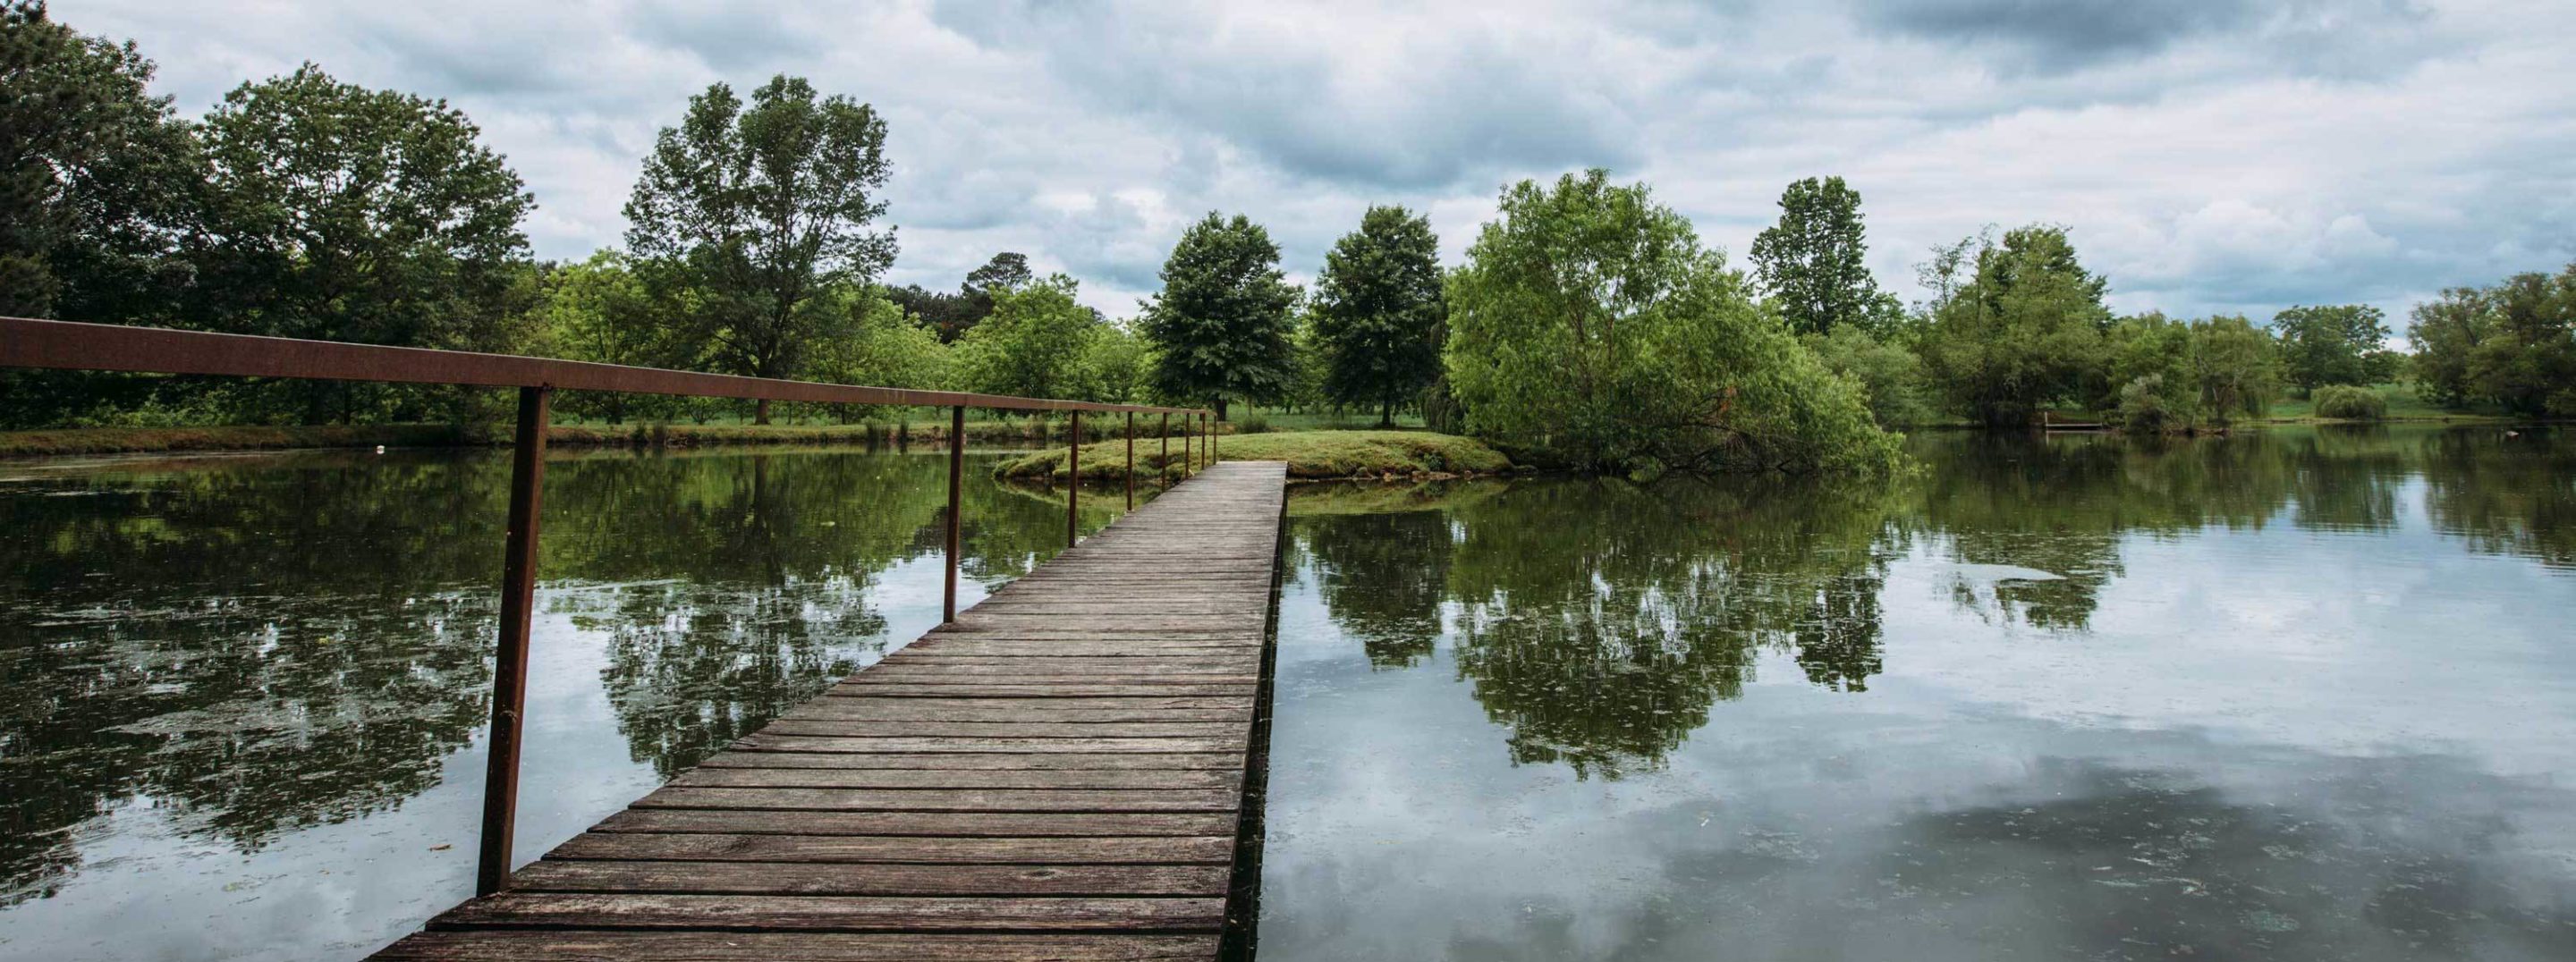 wooden walkway on pond